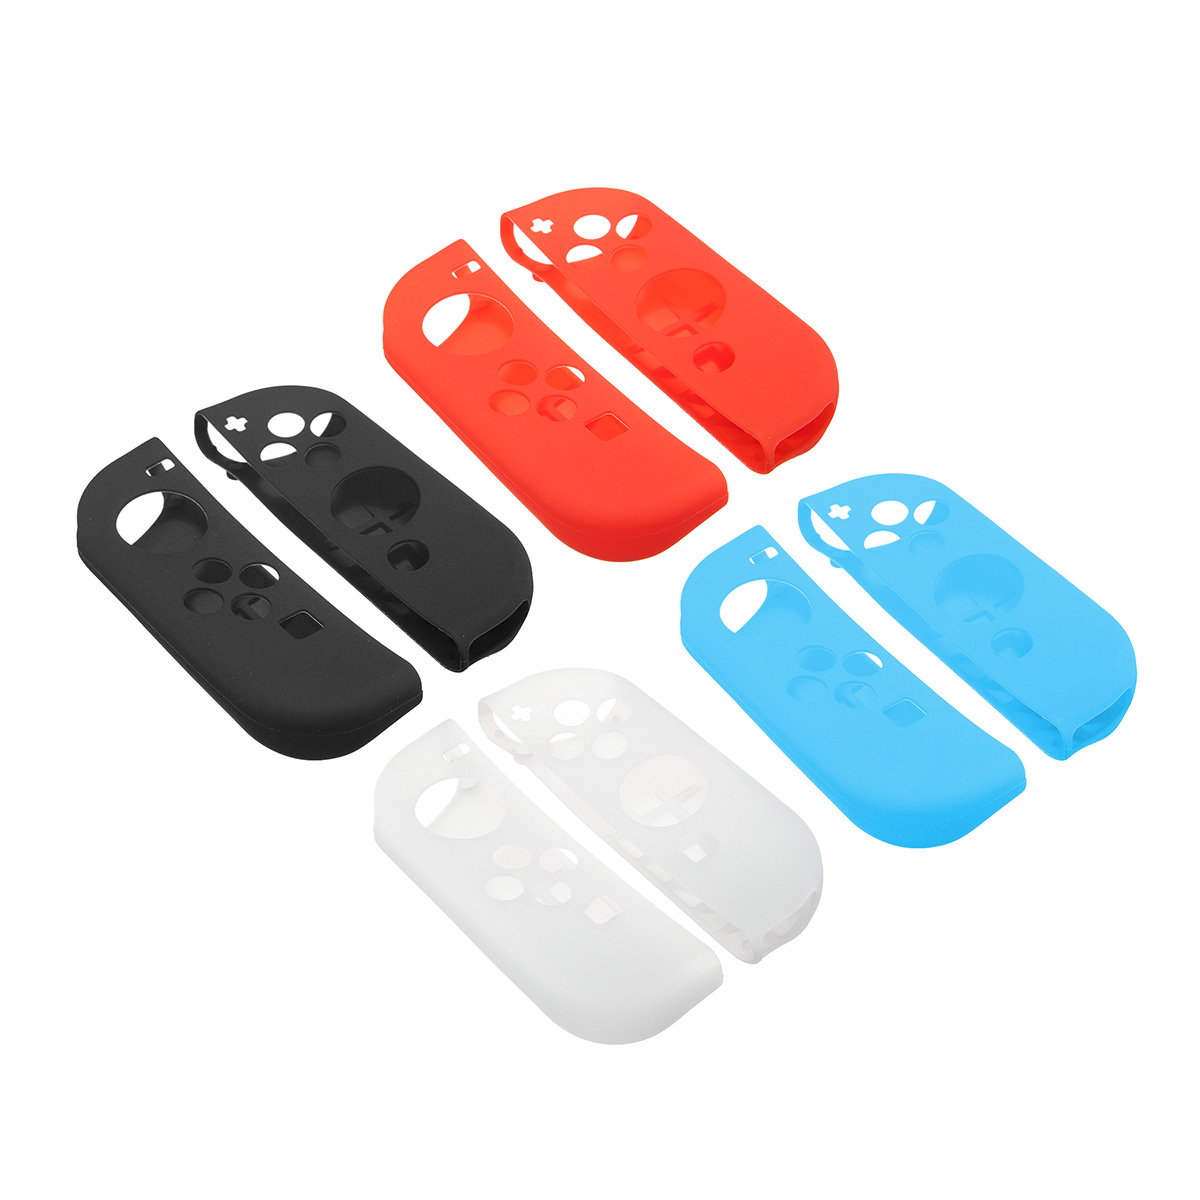 Silicon Case Protective Impact Resistant Rubber Skin Cover For Nintendo Switch Joy-Con Controller 26